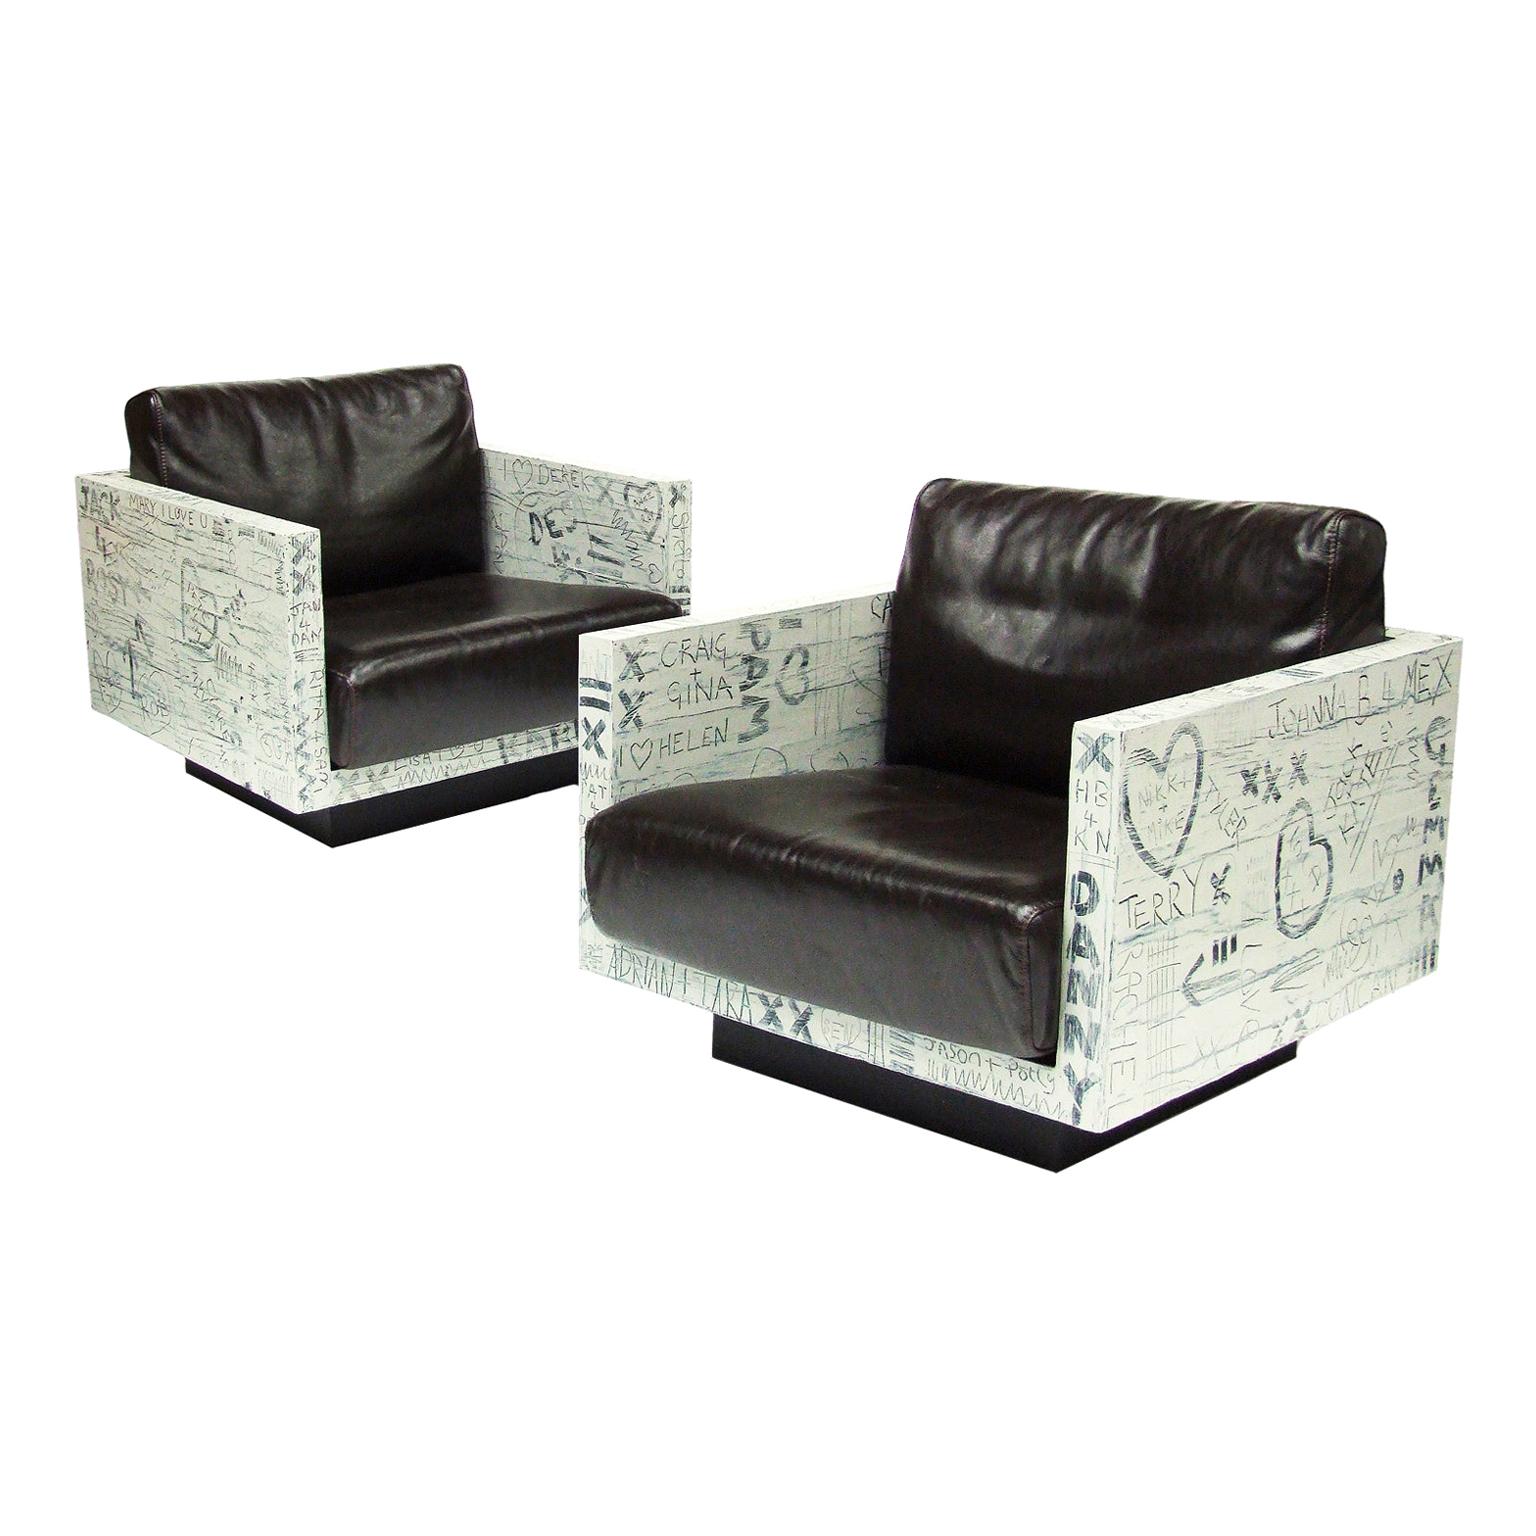 Pair of Sweetheart Graffiti Leather Armchairs Bespoke Art Furniture